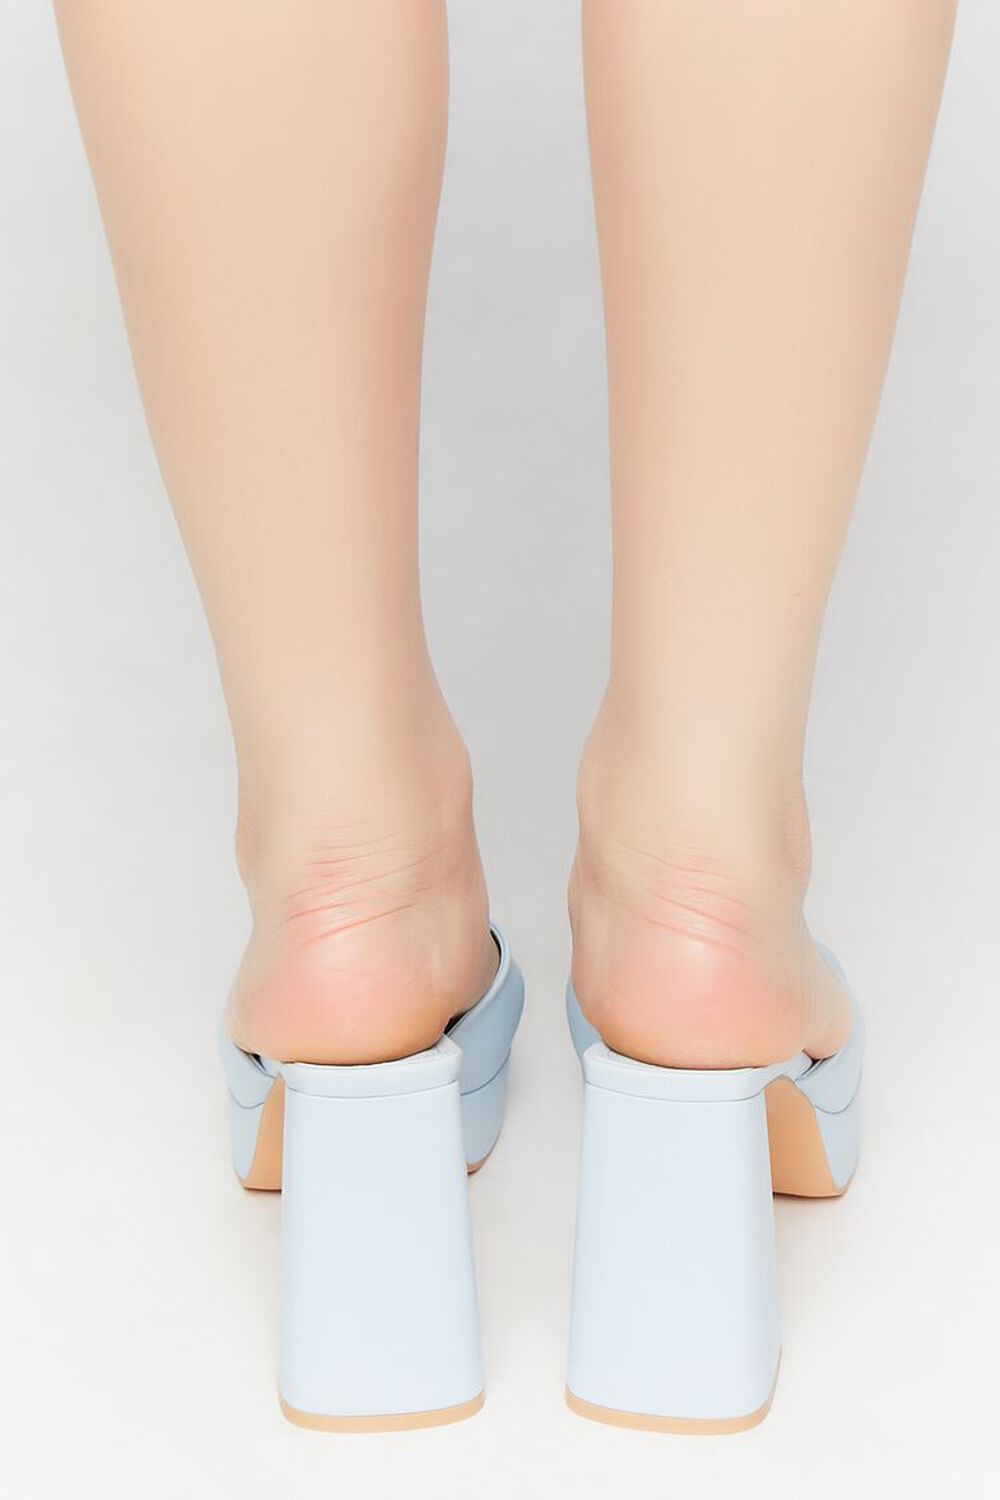 SKY BLUE Faux Leather Open-Toe Platform Heels, image 3